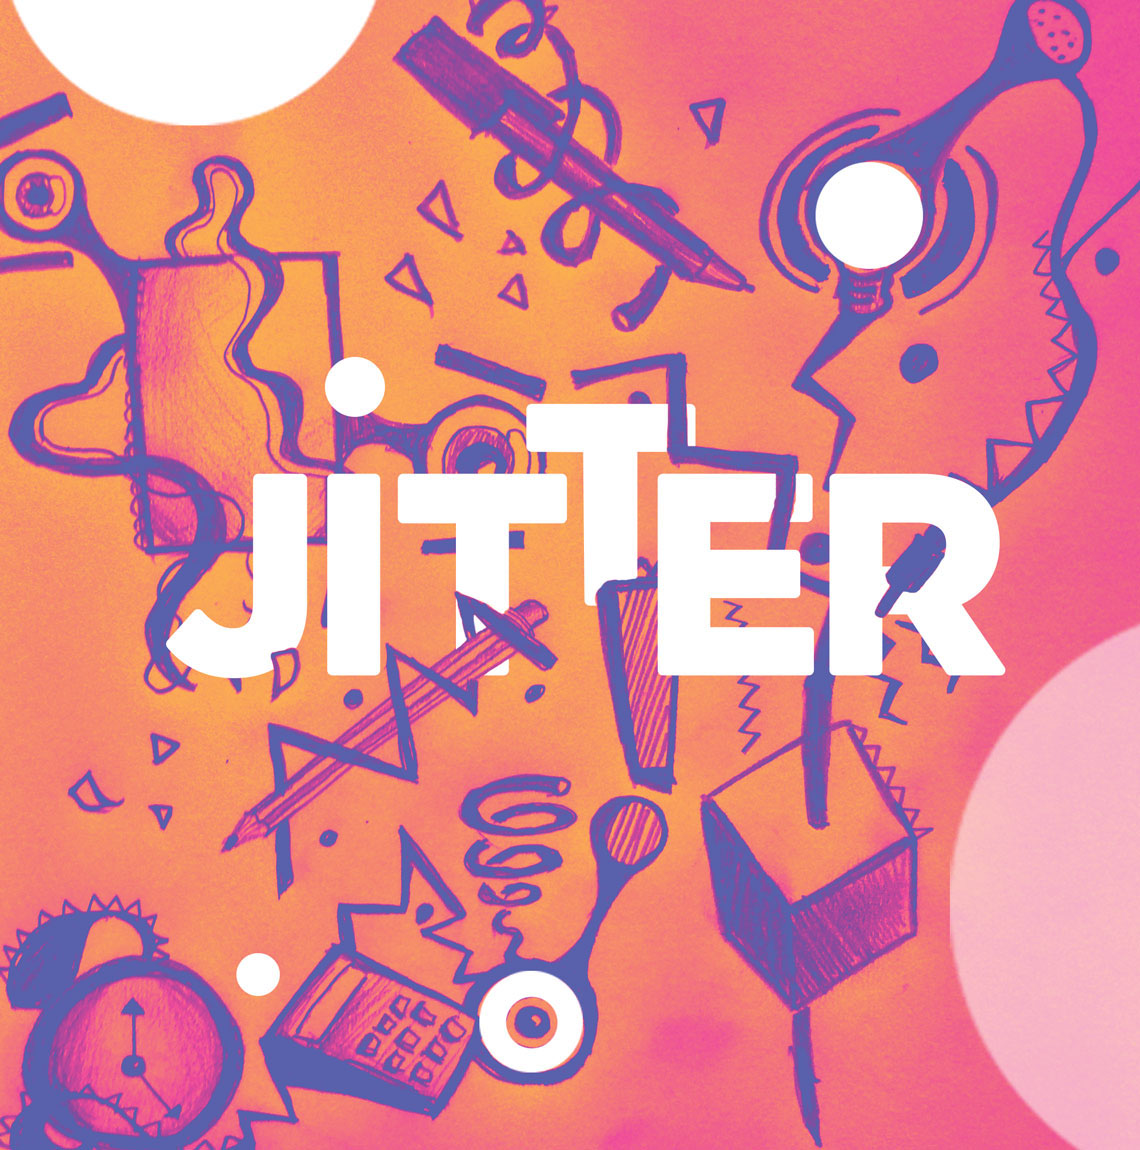 jitter Coffee brand colour color bright logo orange pink blue purple illustrate draw art clean